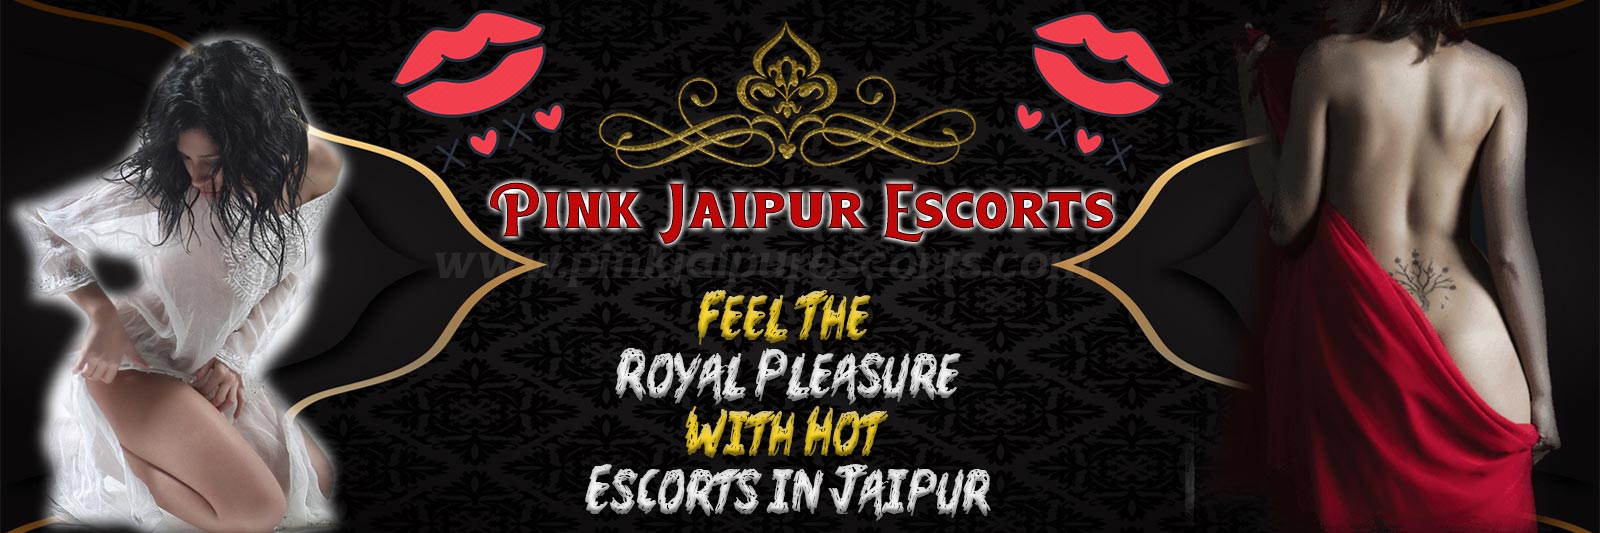 Escorts Service in Jaipur